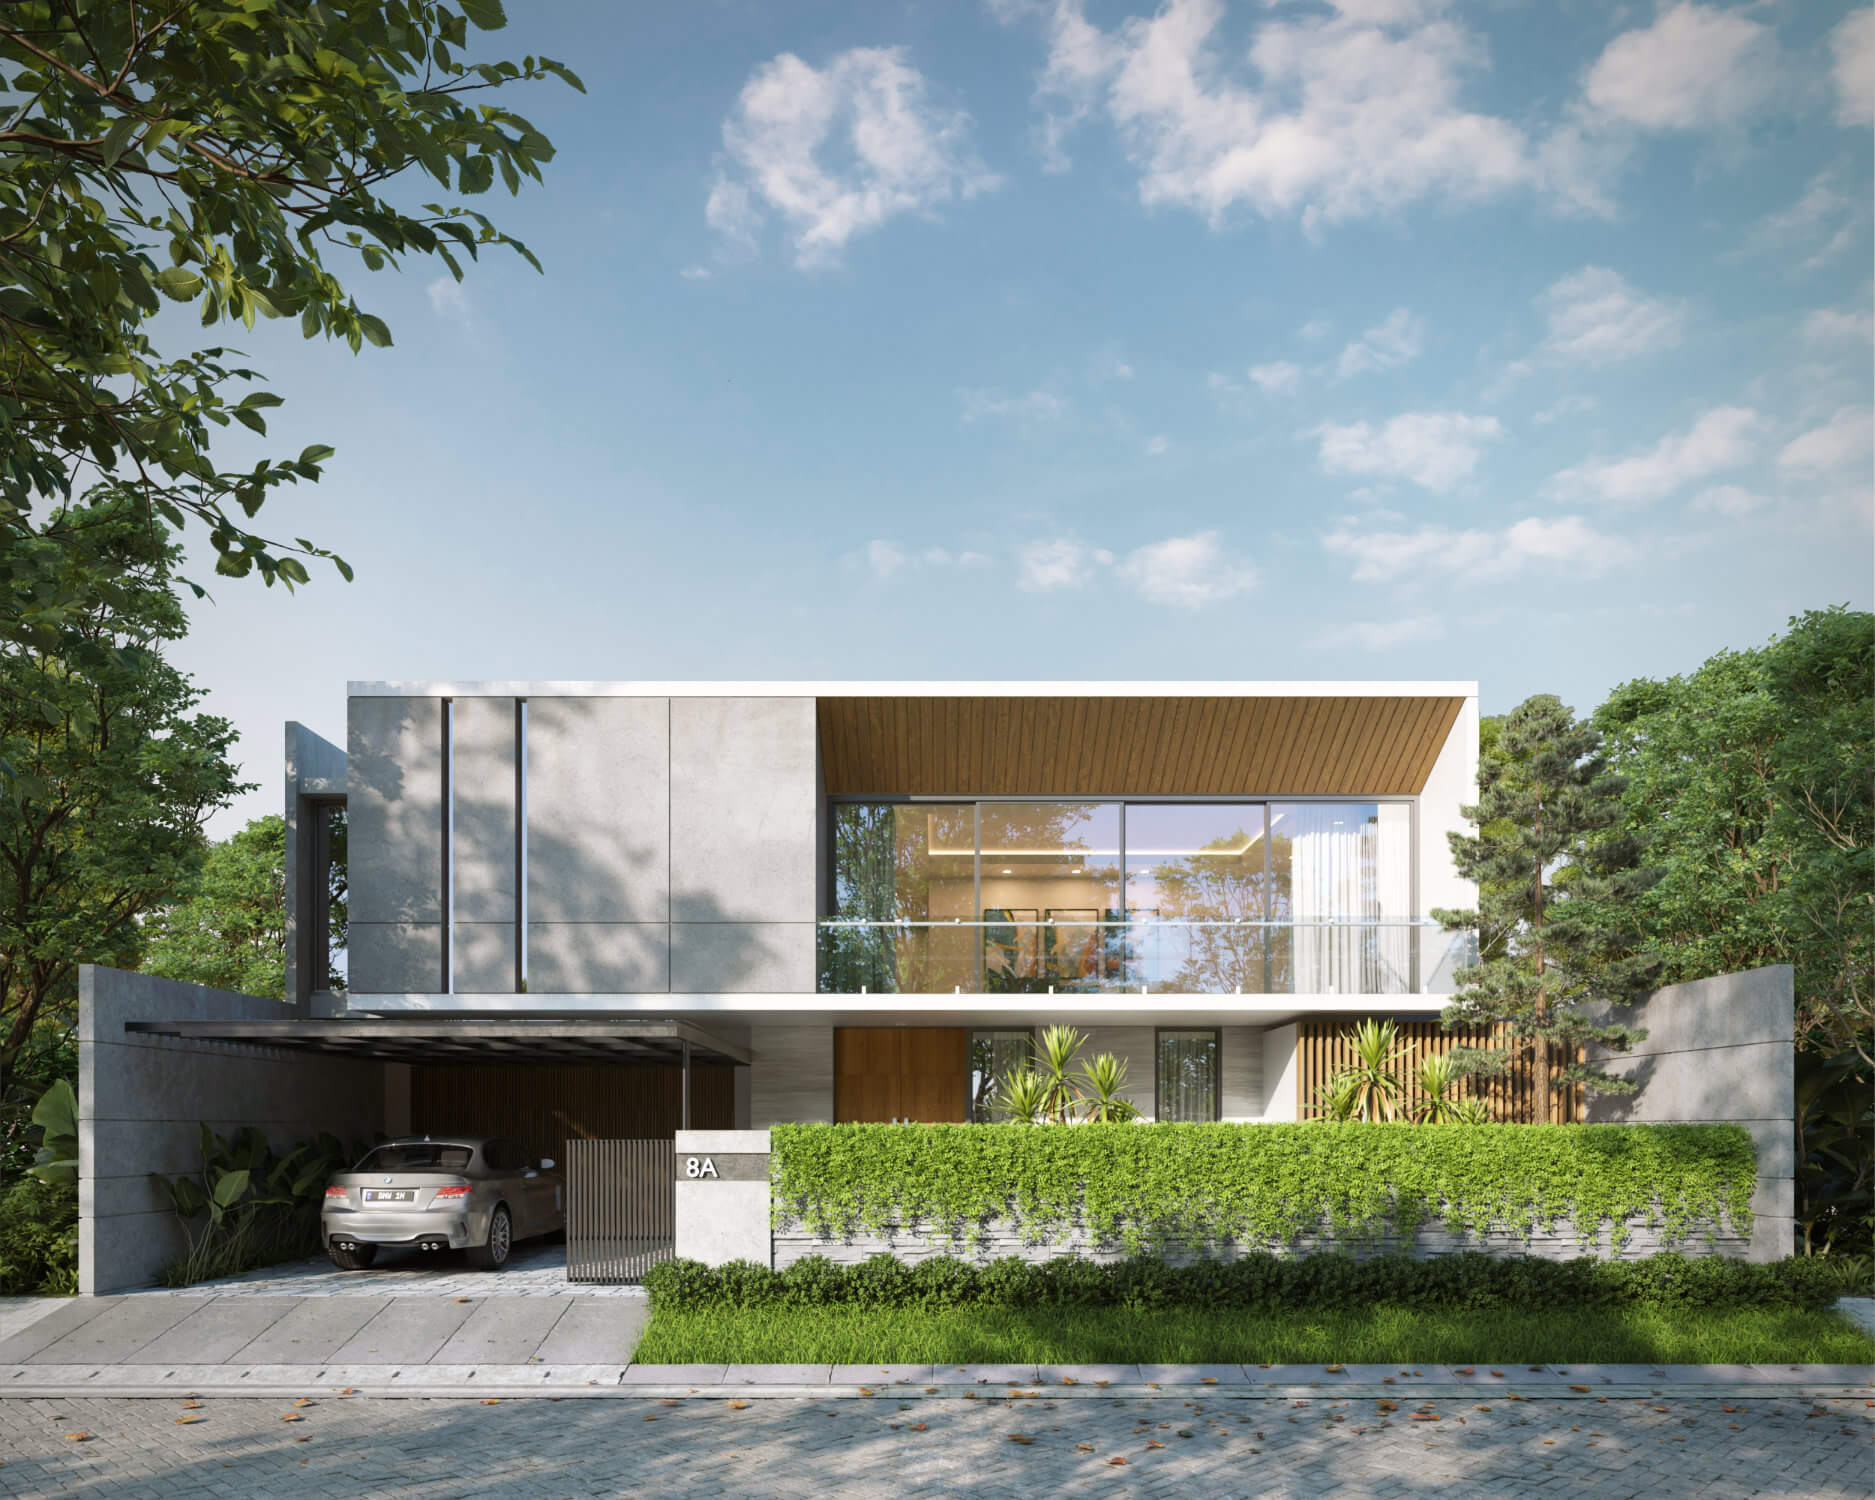 Residential exterior with Blender and Octane Render (Profile) \u2022 Blender 3D Architect